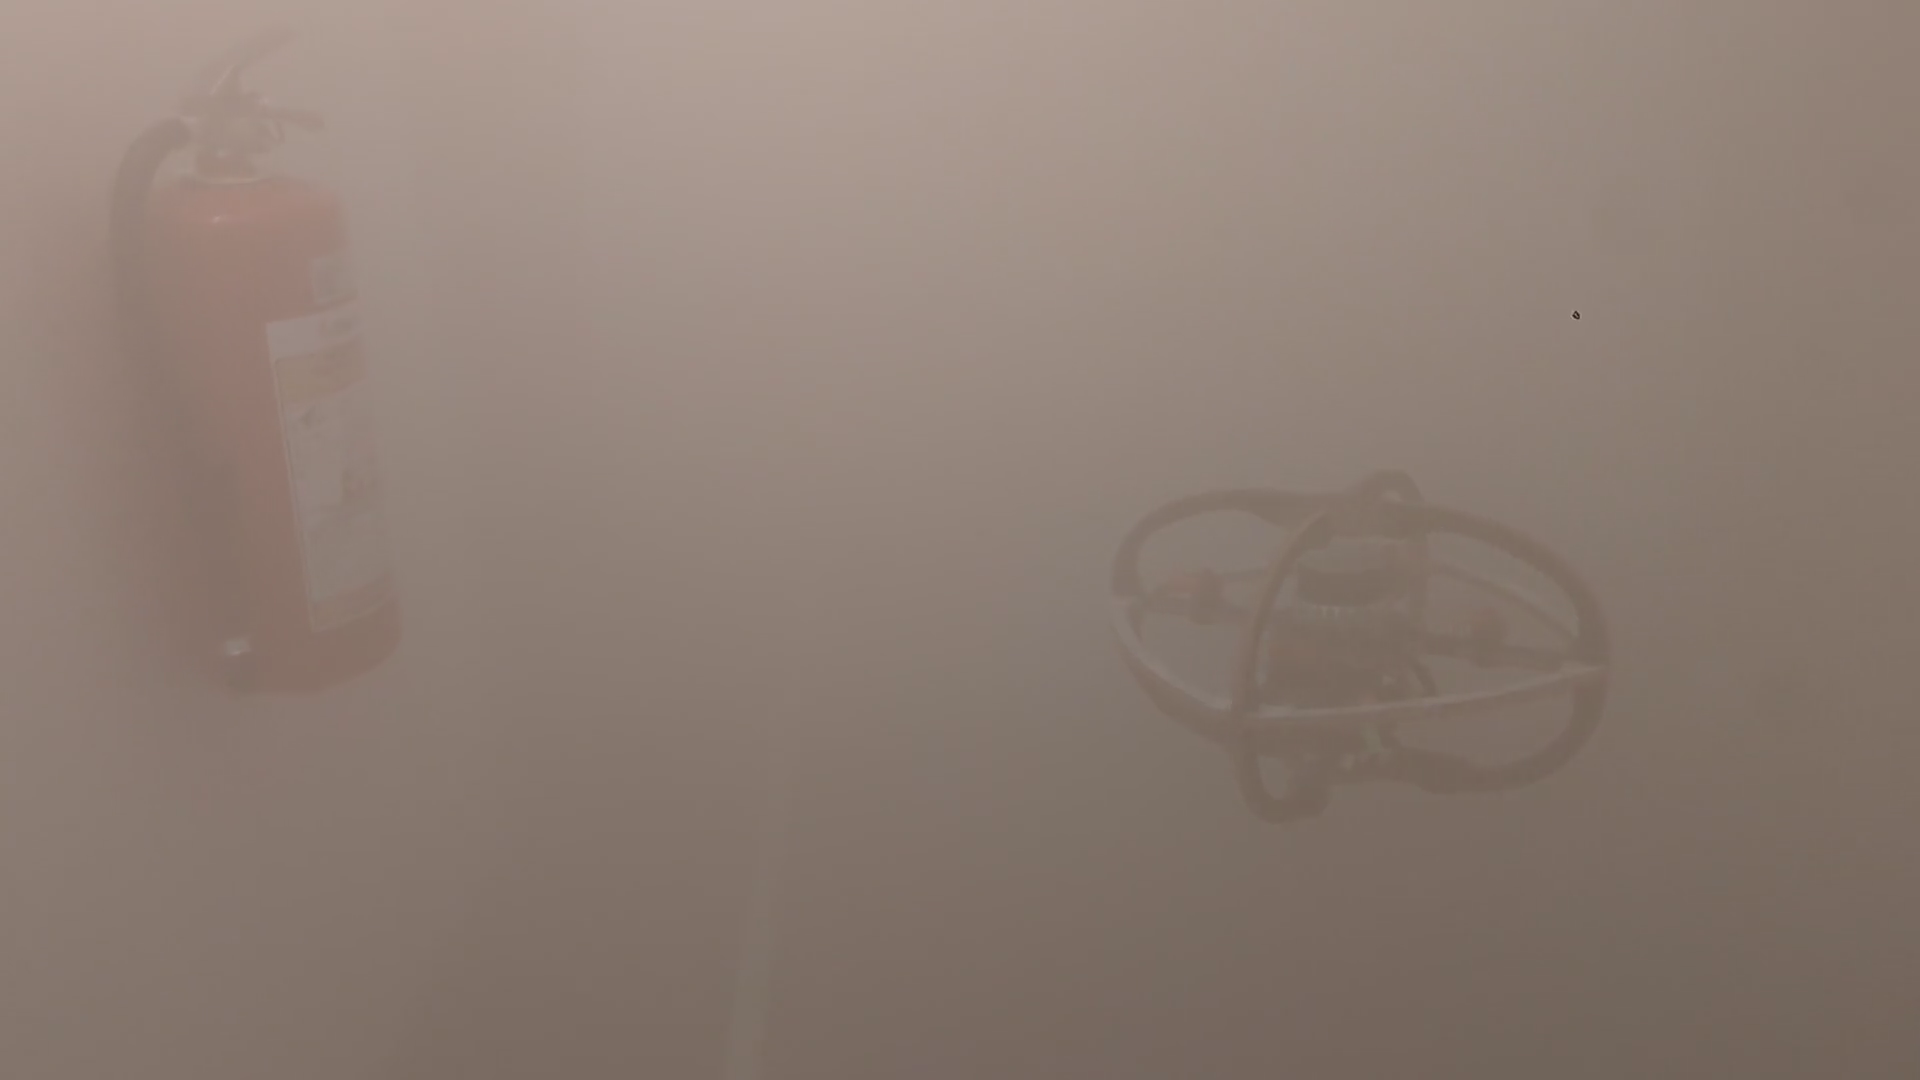 fog-filled university corridor image